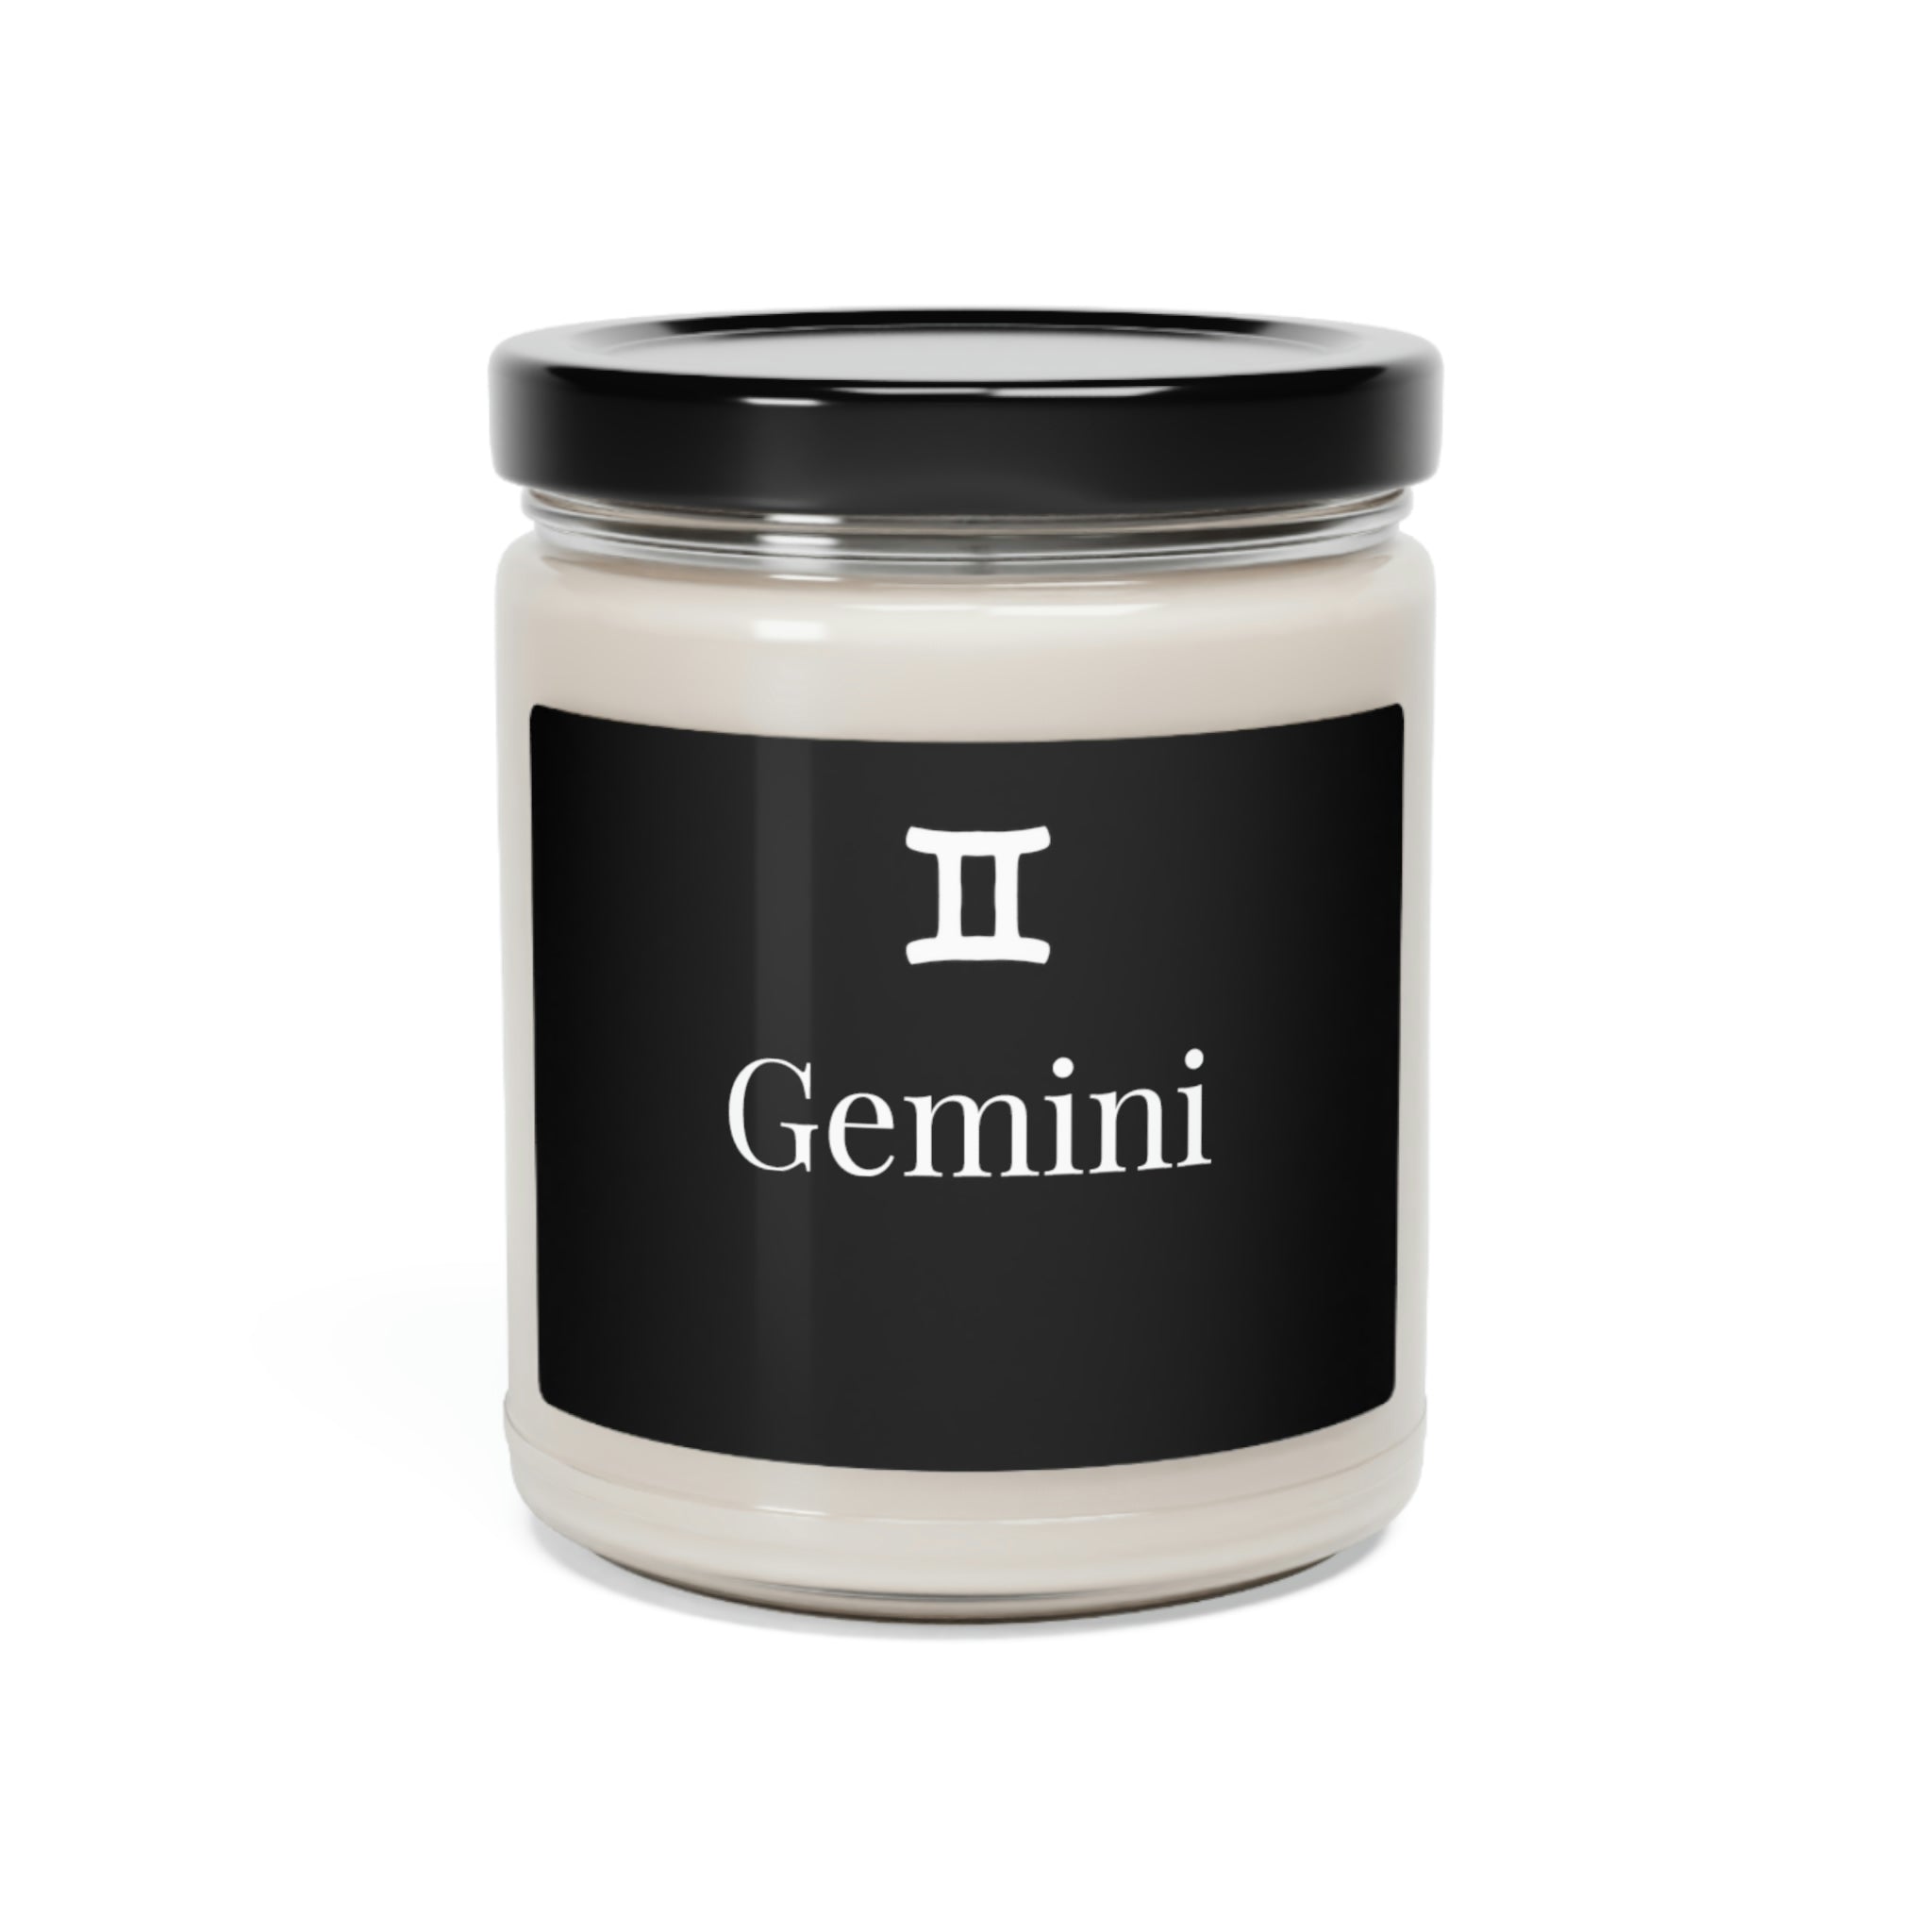 Gemini Scented Candle